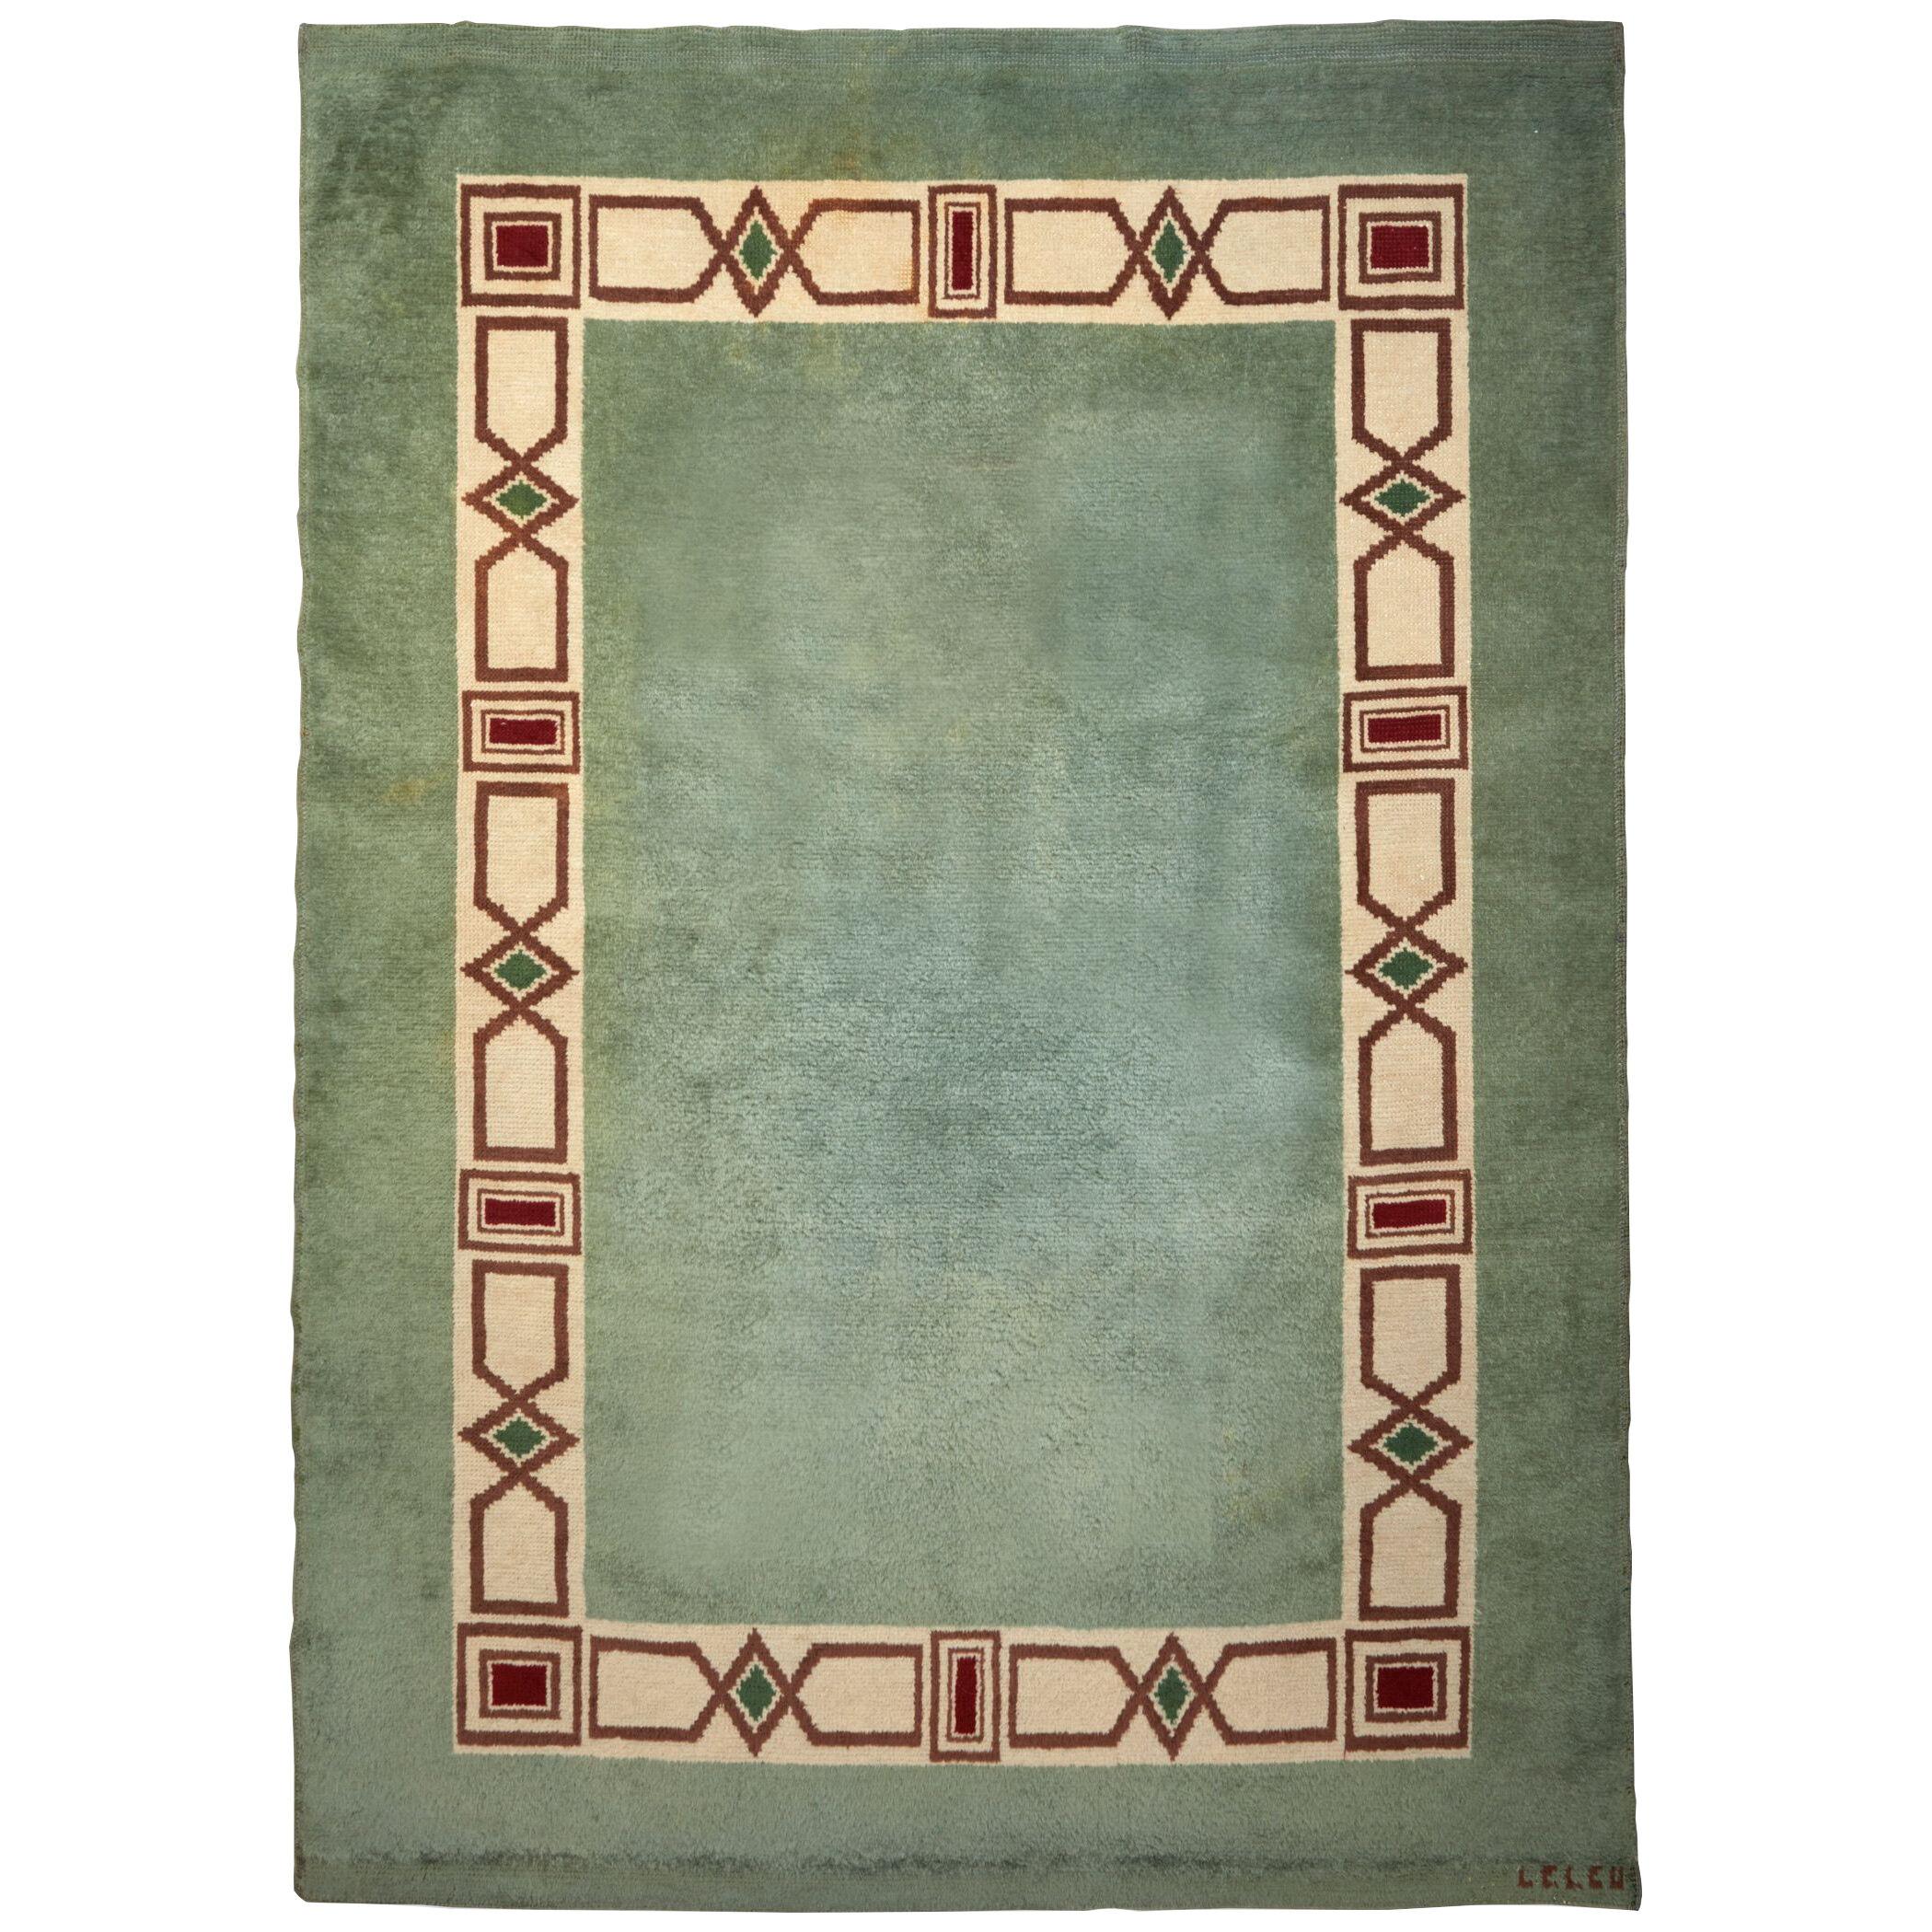 Rectangular Woollen Carpet by Paule Leleu, circa 1940